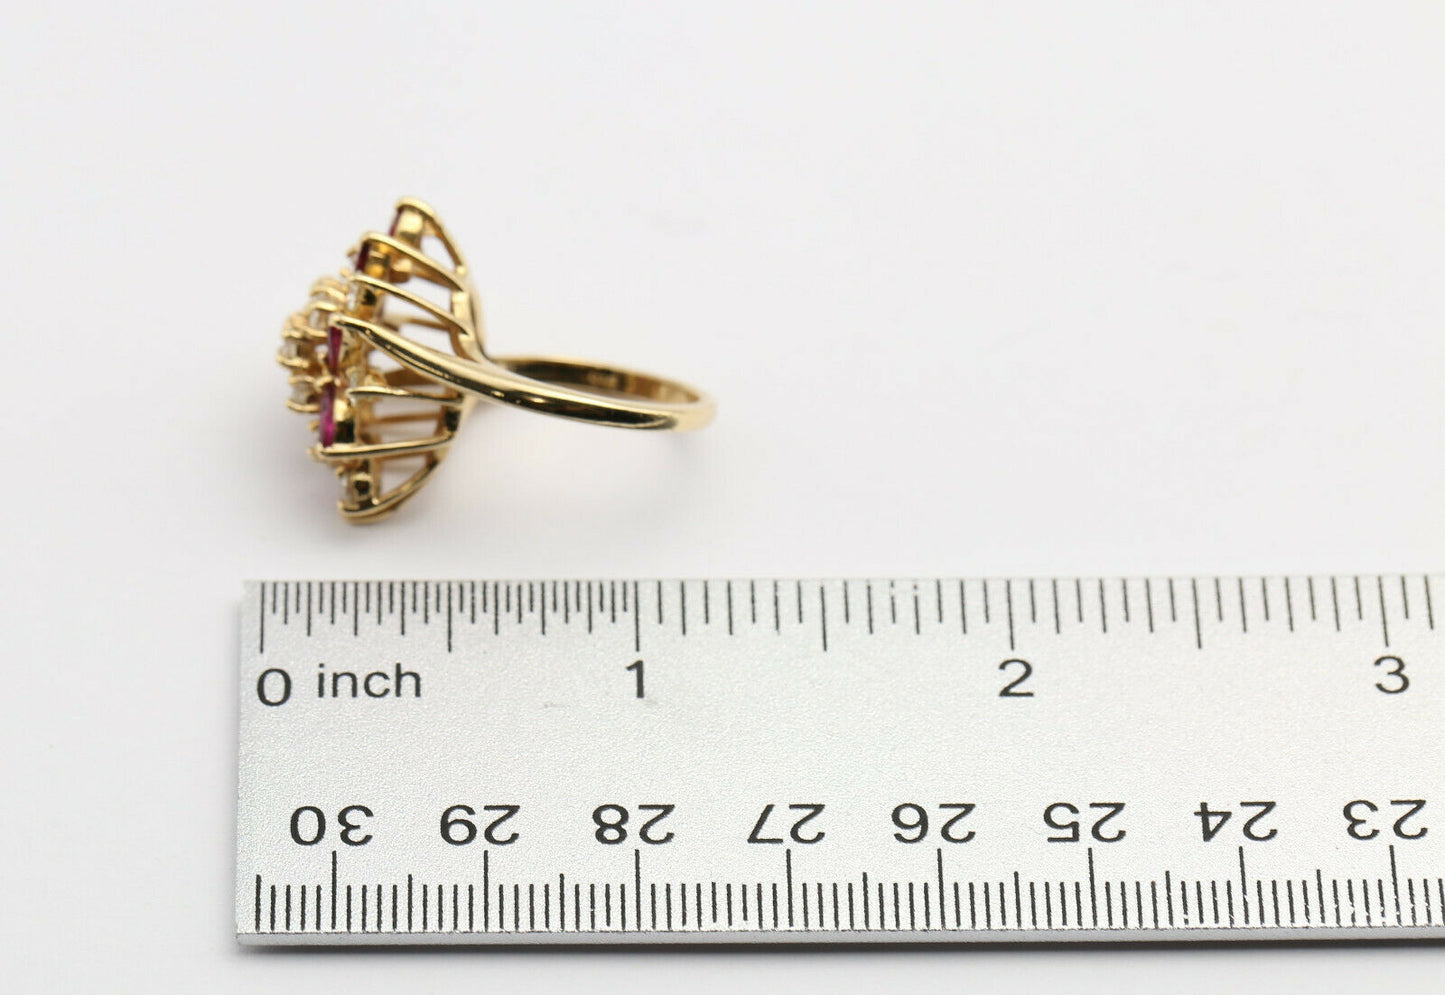 14k Yellow Gold Art Deco Diamond & Ruby Ring, Size 6.75 - 7.2g